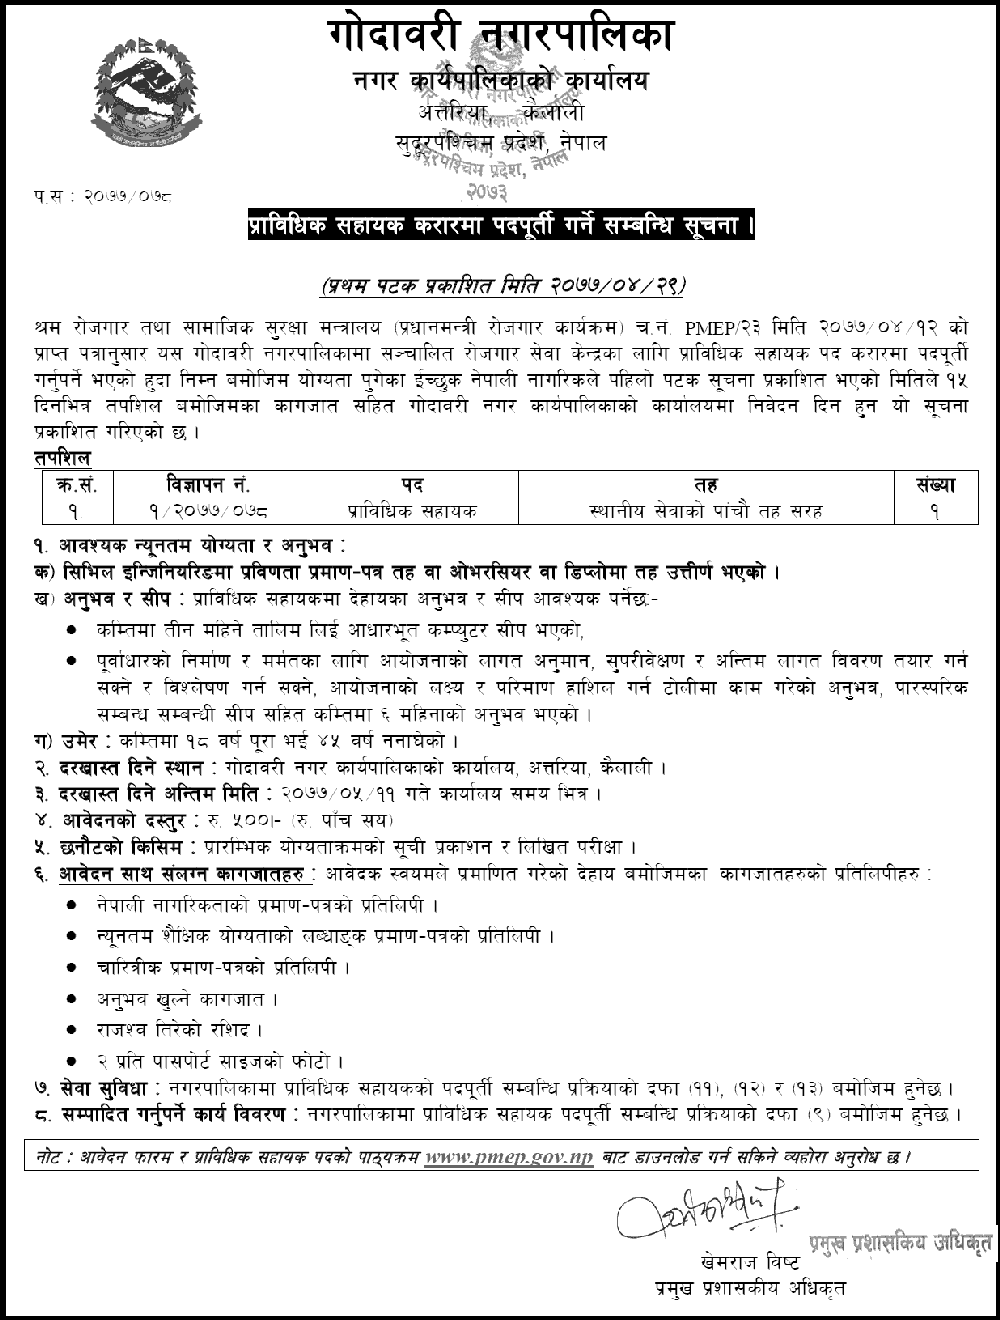 Godawari Municipality Kailali Vacancy for Technical Assistant